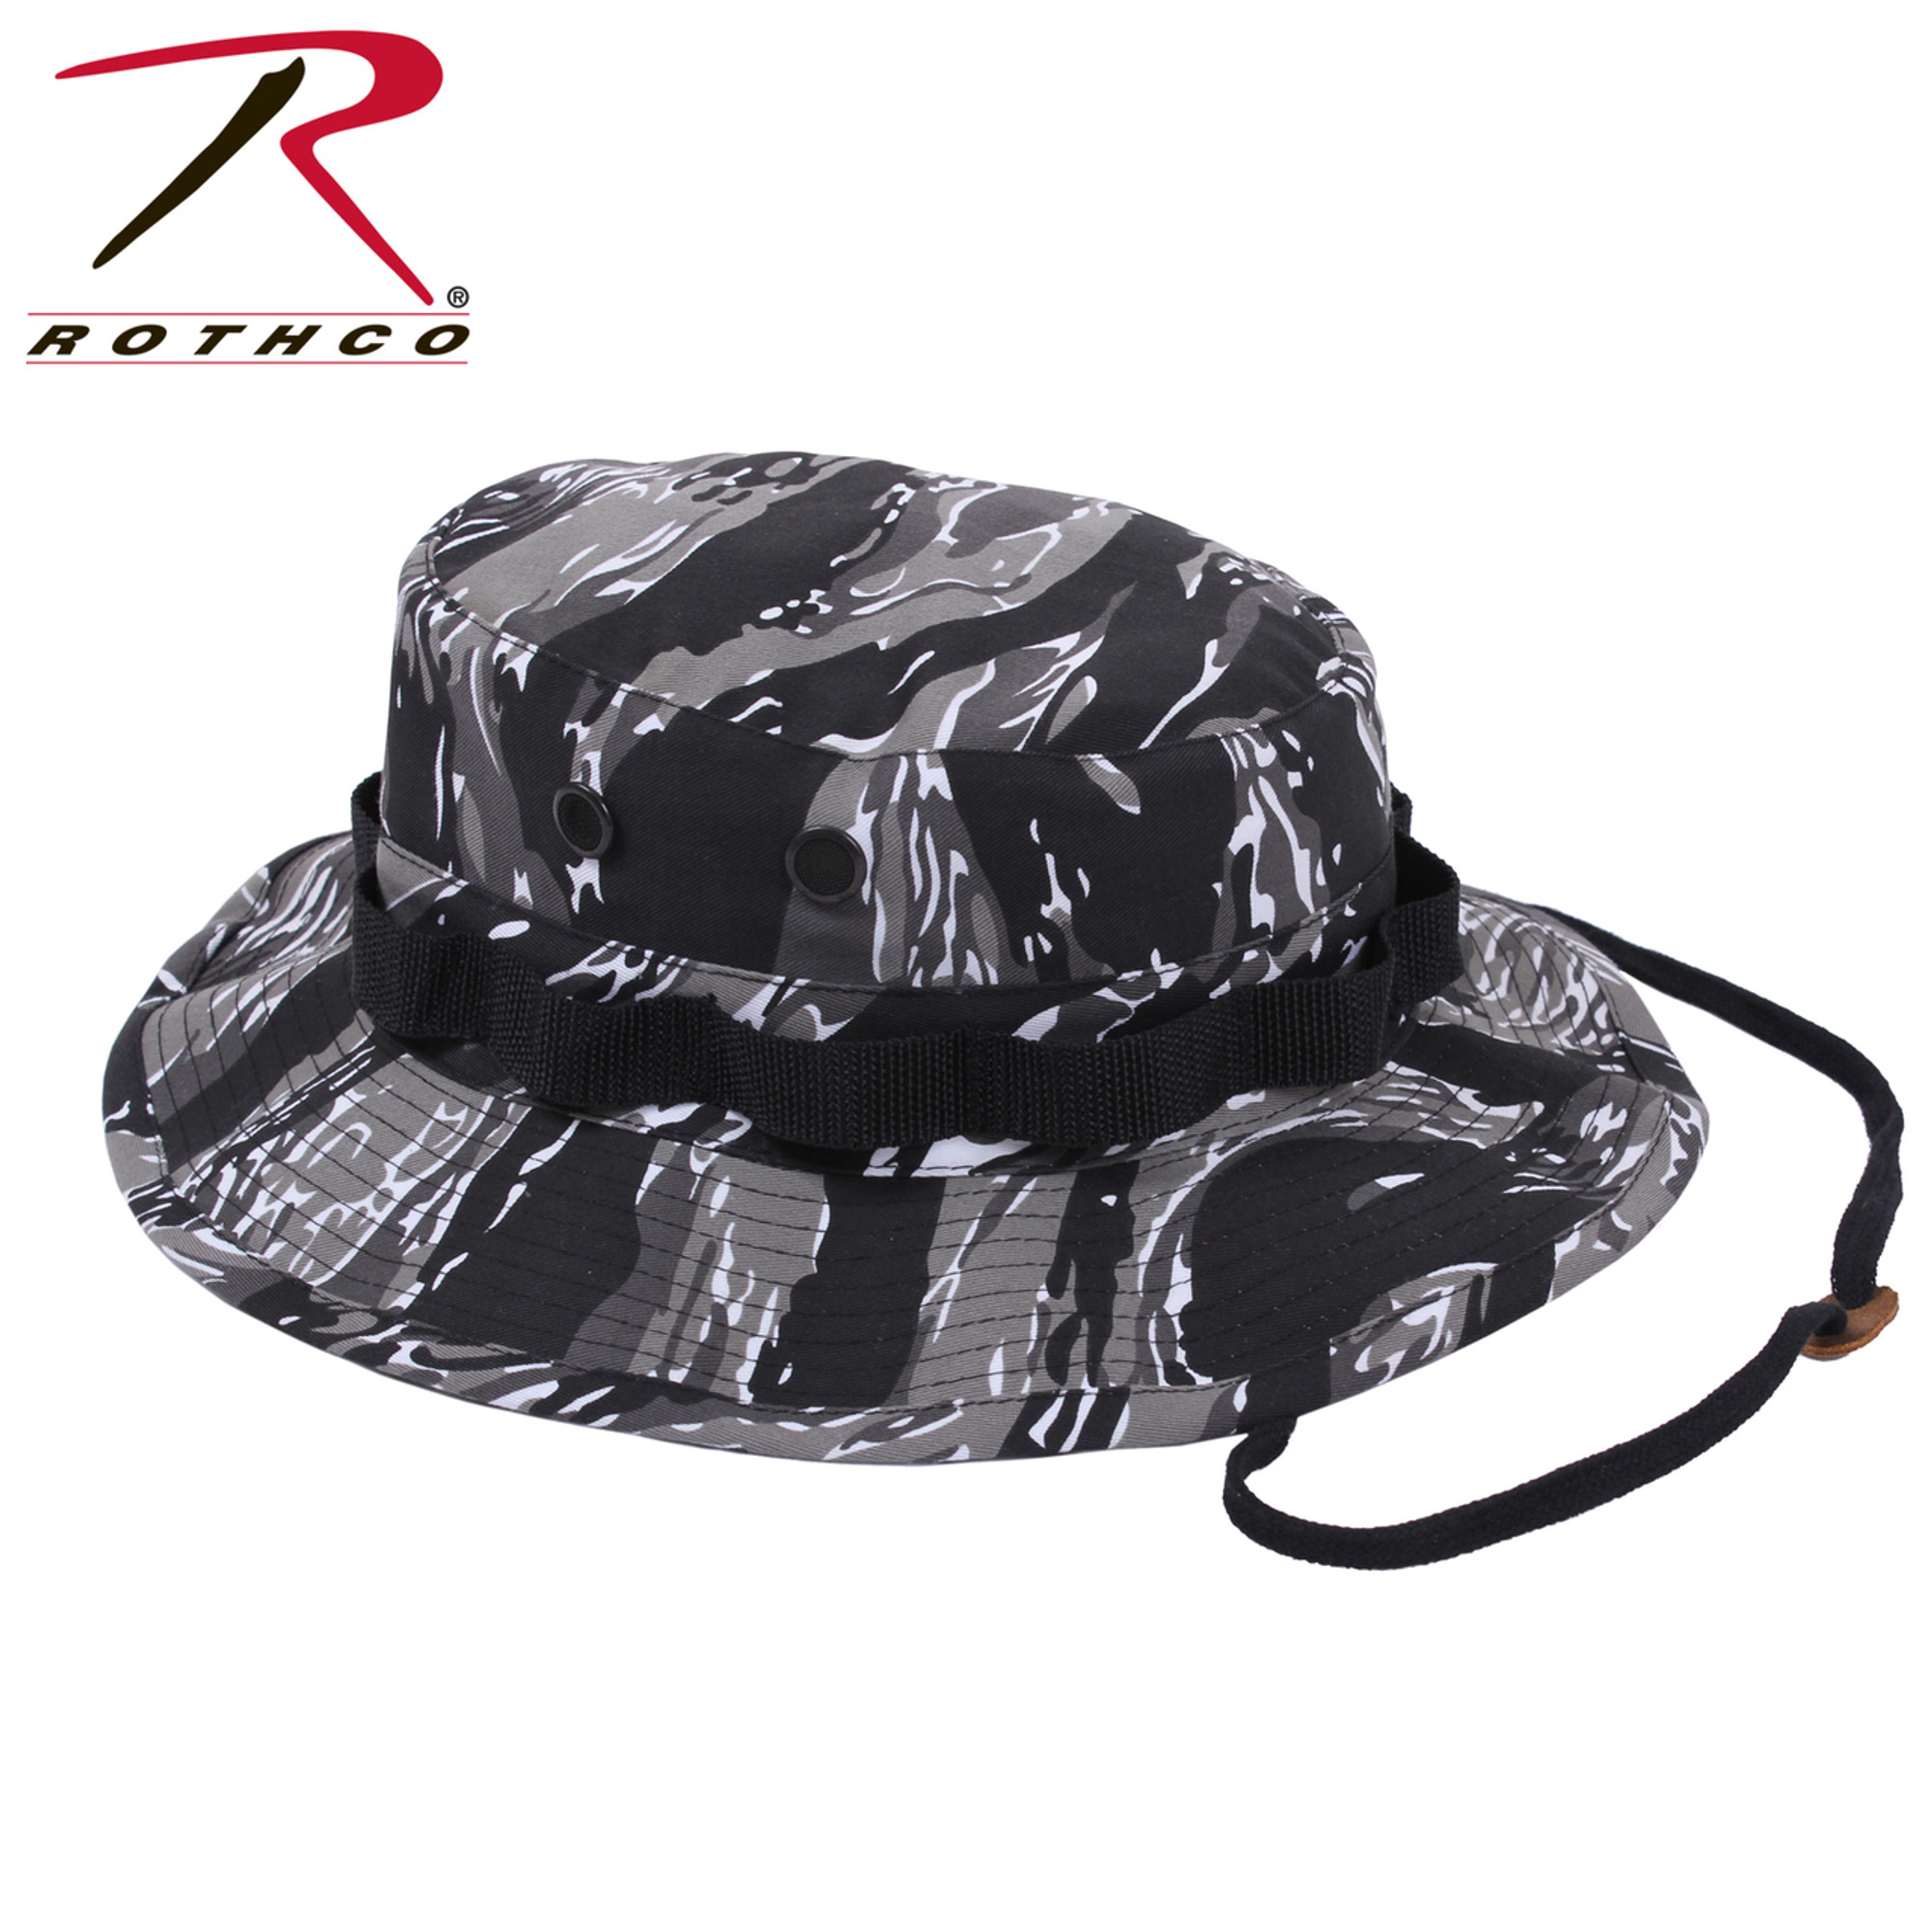 Rothco Camo Boonie Hat - Urban Tiger Stripe